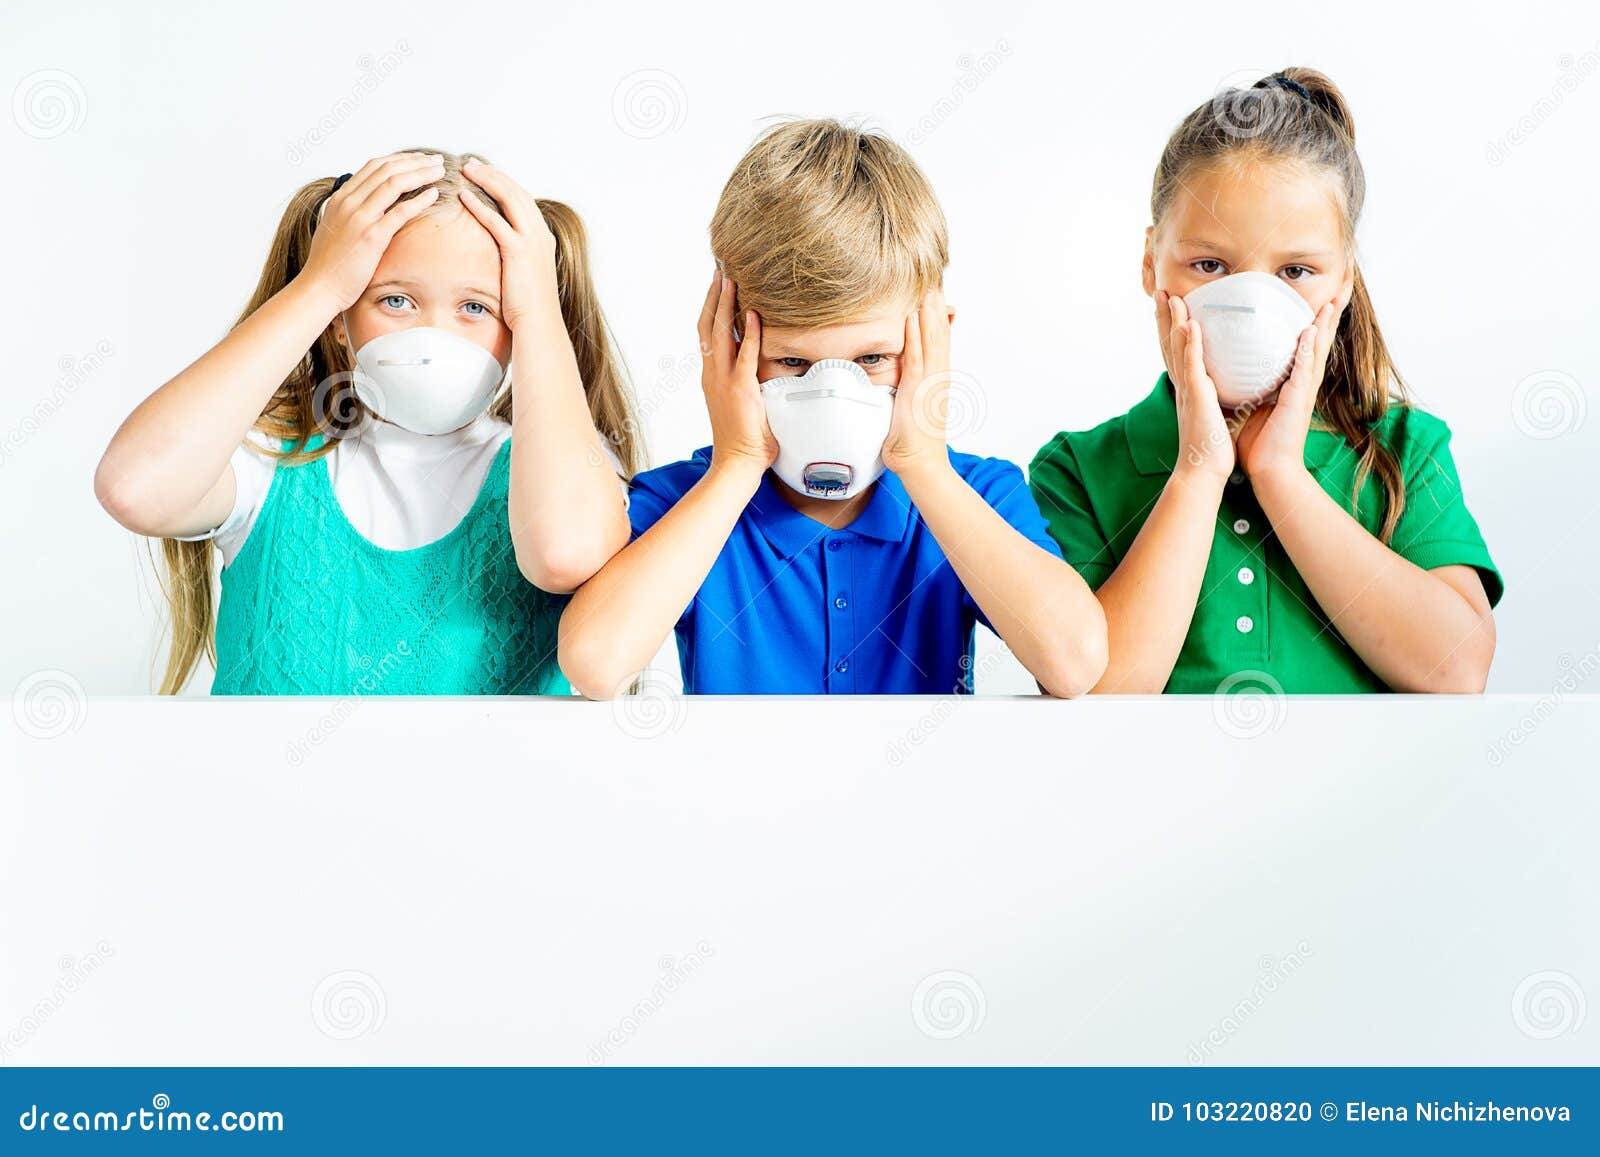 masque enfants respiratoire